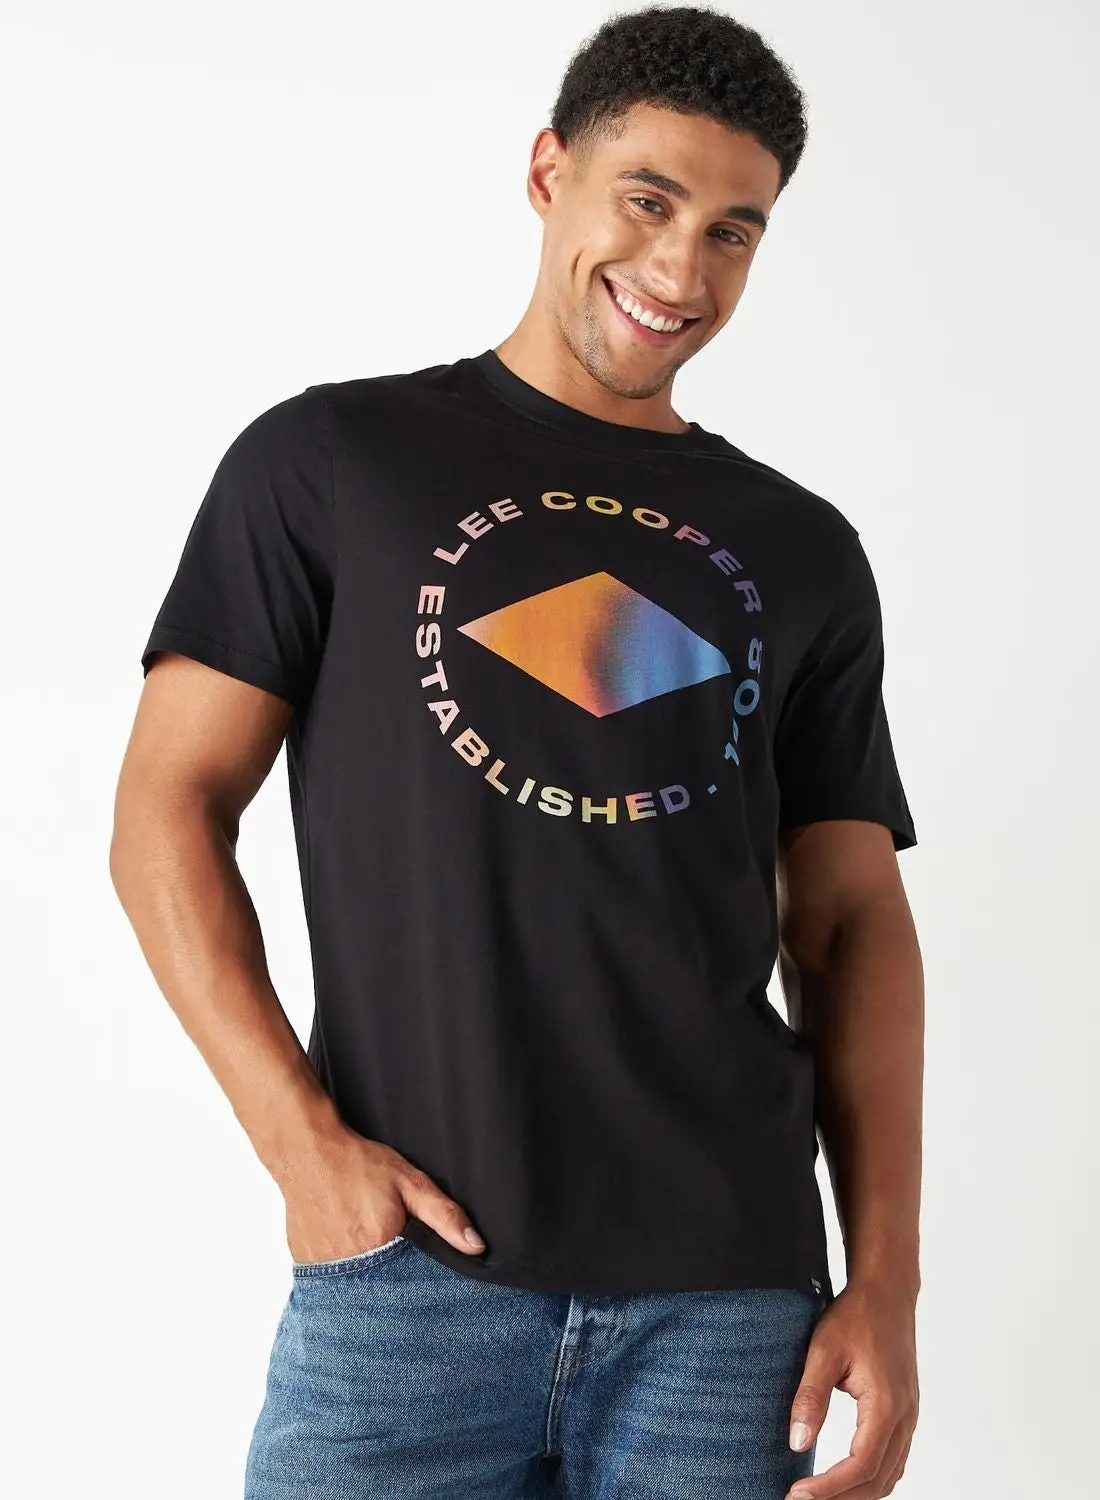 Lee Cooper Graphic Crew Neck T-Shirt